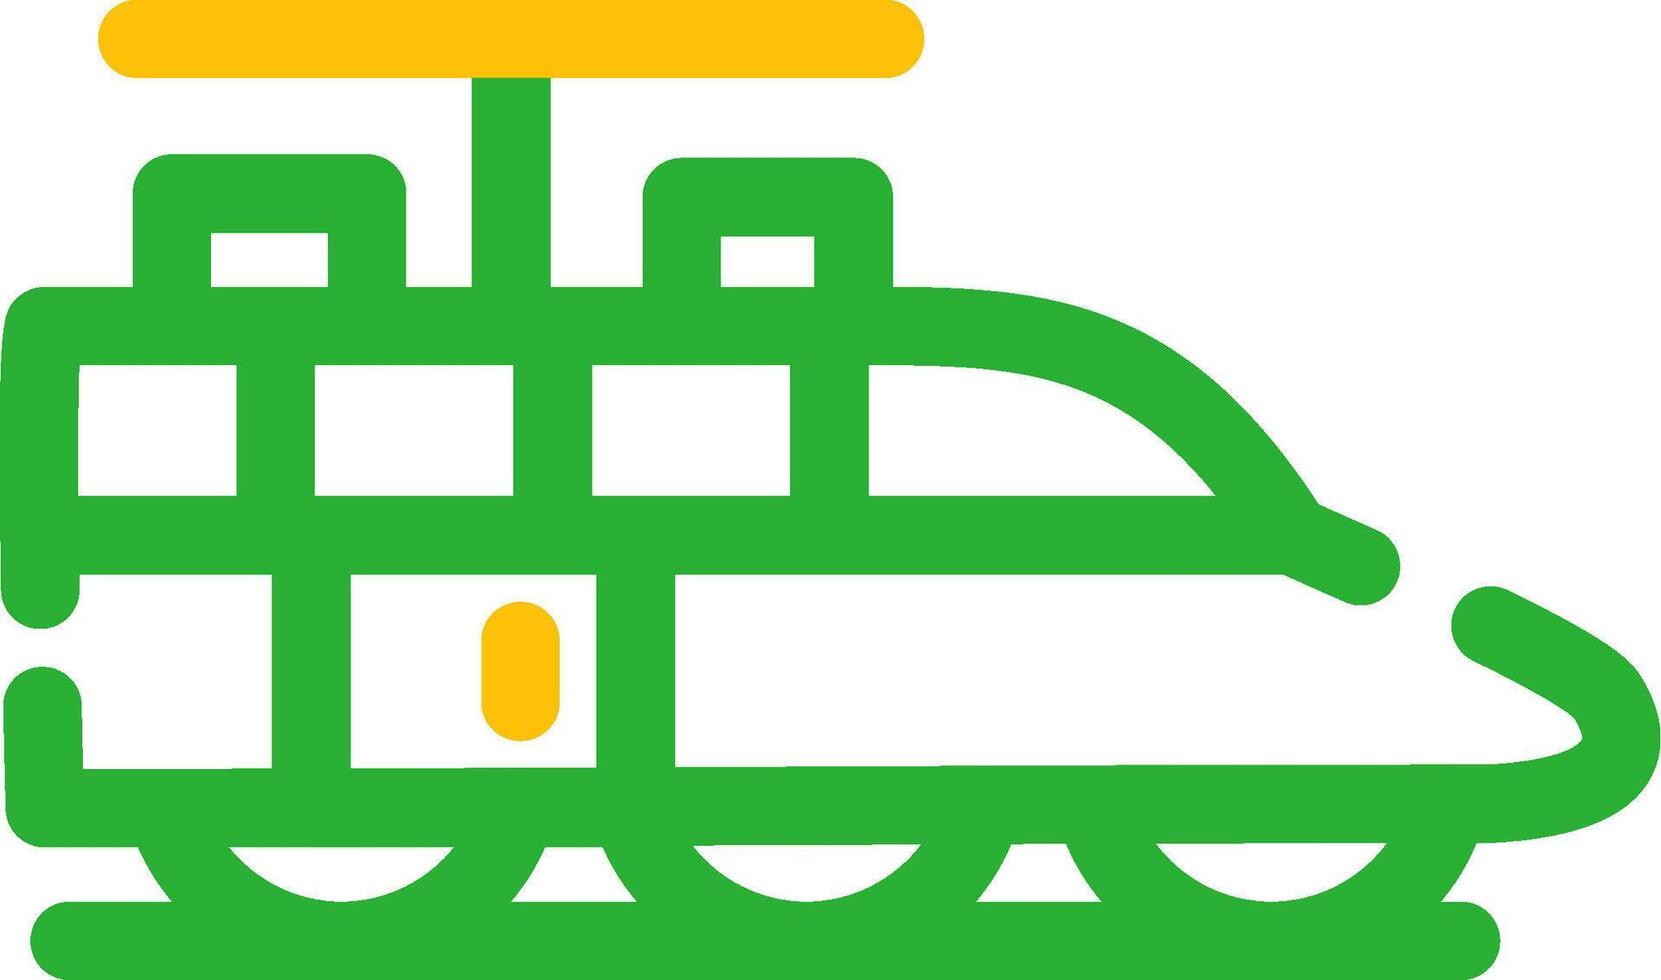 diseño de icono creativo de tren vector